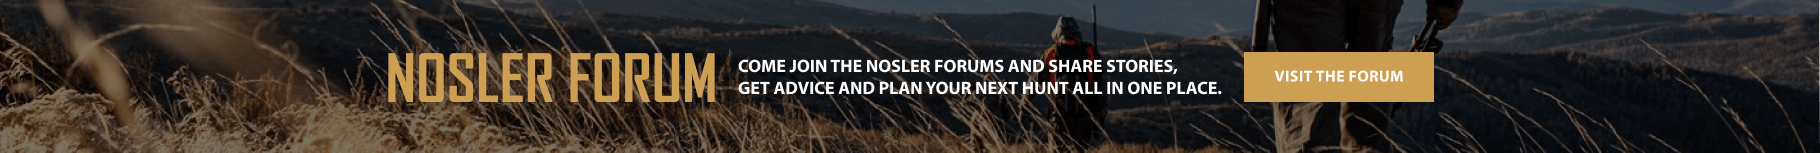 Nosler Forum